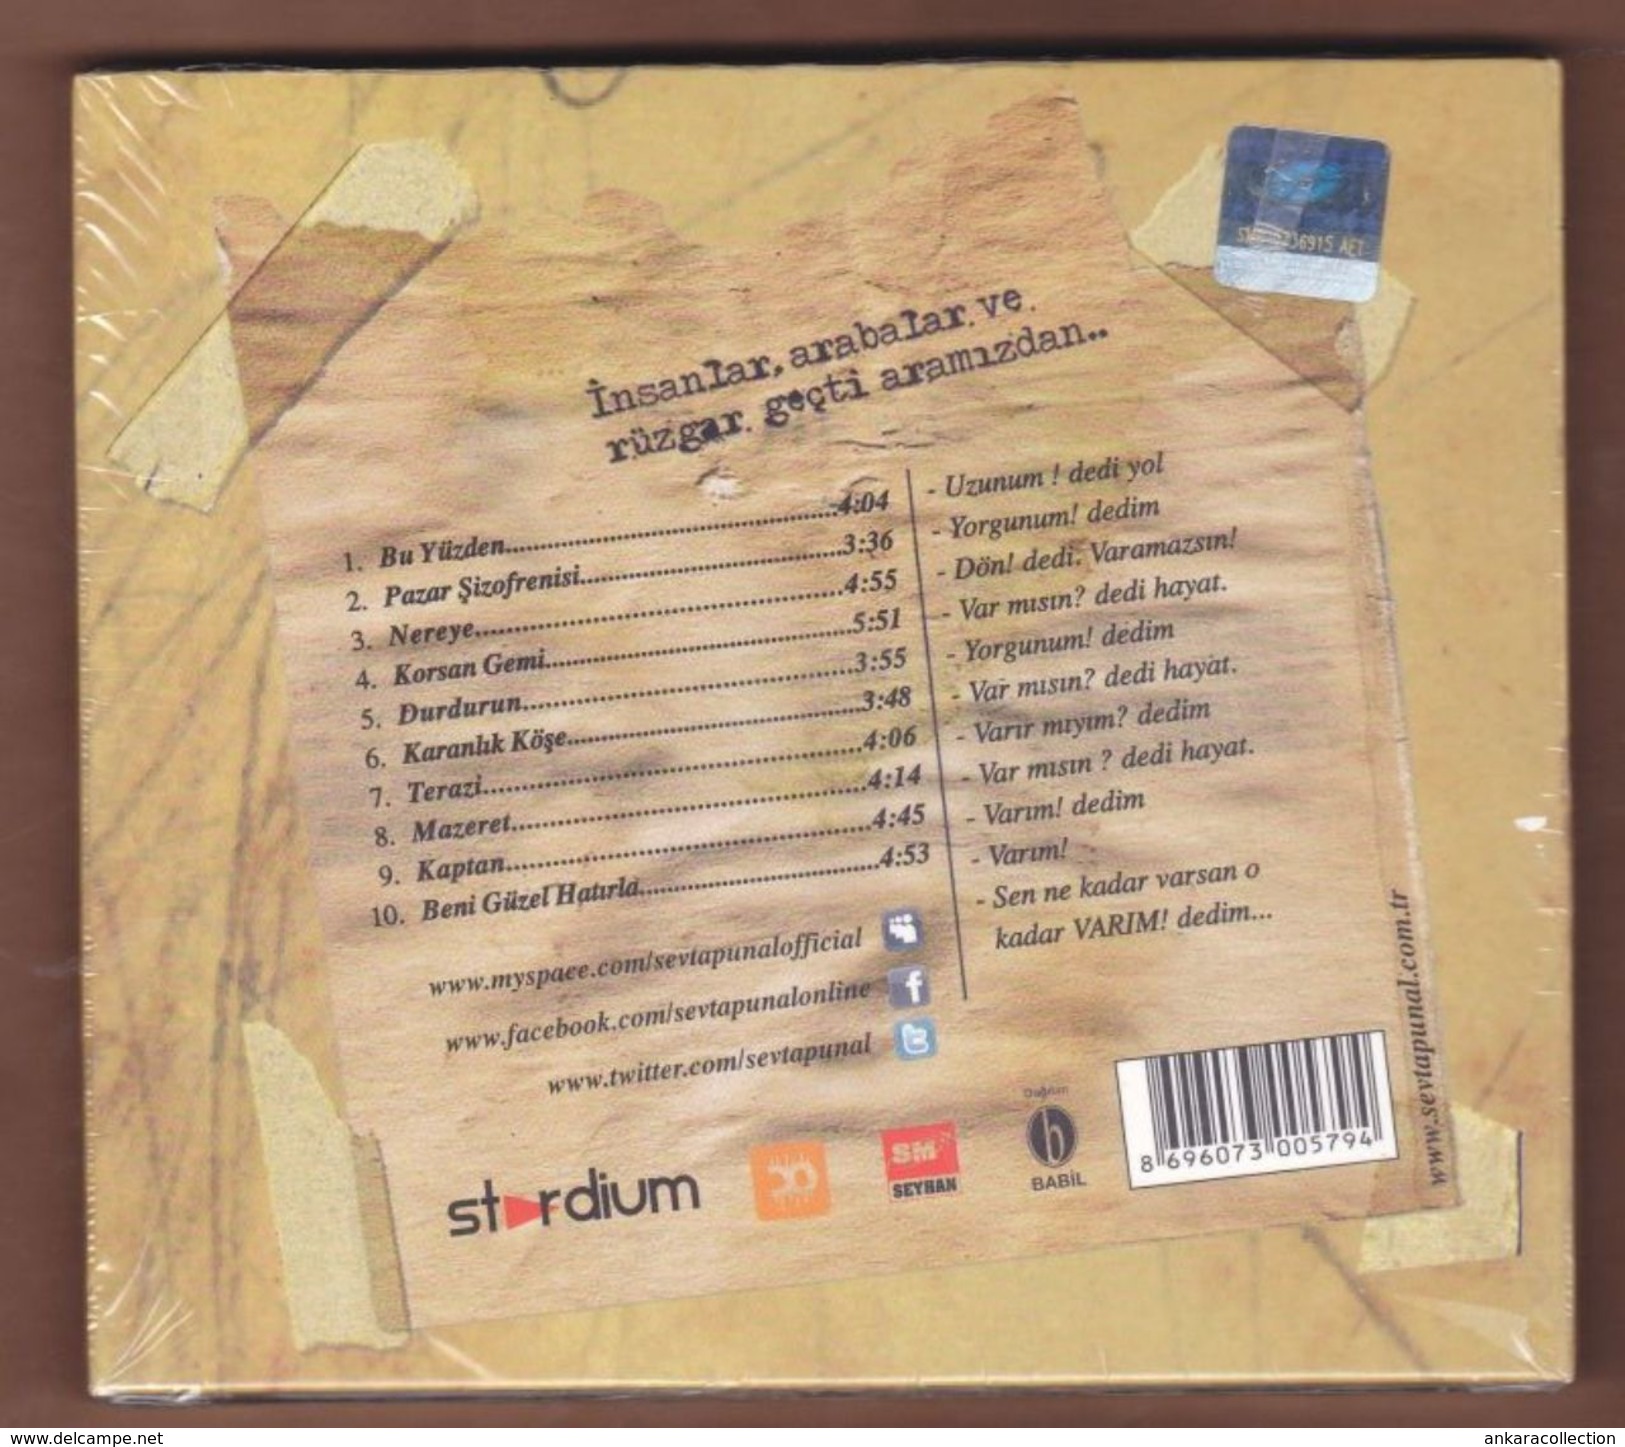 AC - Sevtap ünal Insanlar, Arabalar Ve Rüzgar Geçti Aramızdan BRAND NEW TURKISH MUSIC CD - Wereldmuziek